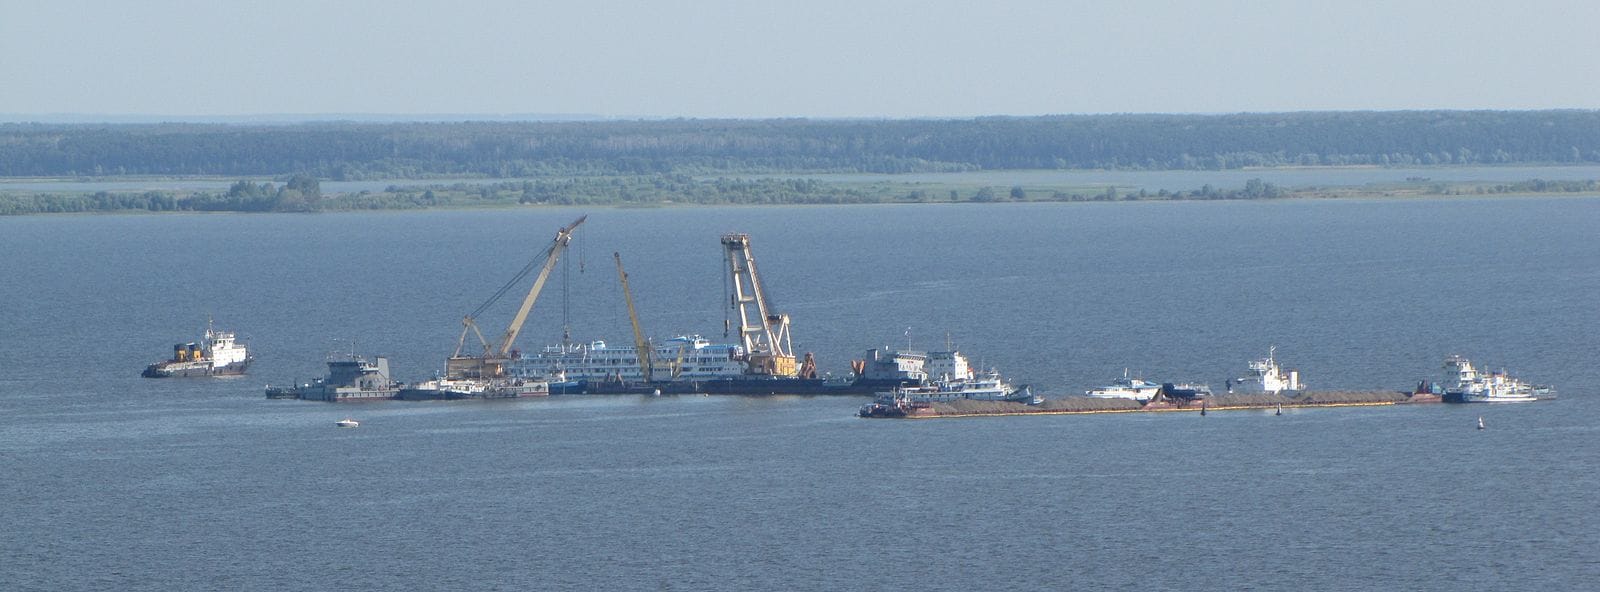 River cruise ship Bulgaria sinks in the Volga